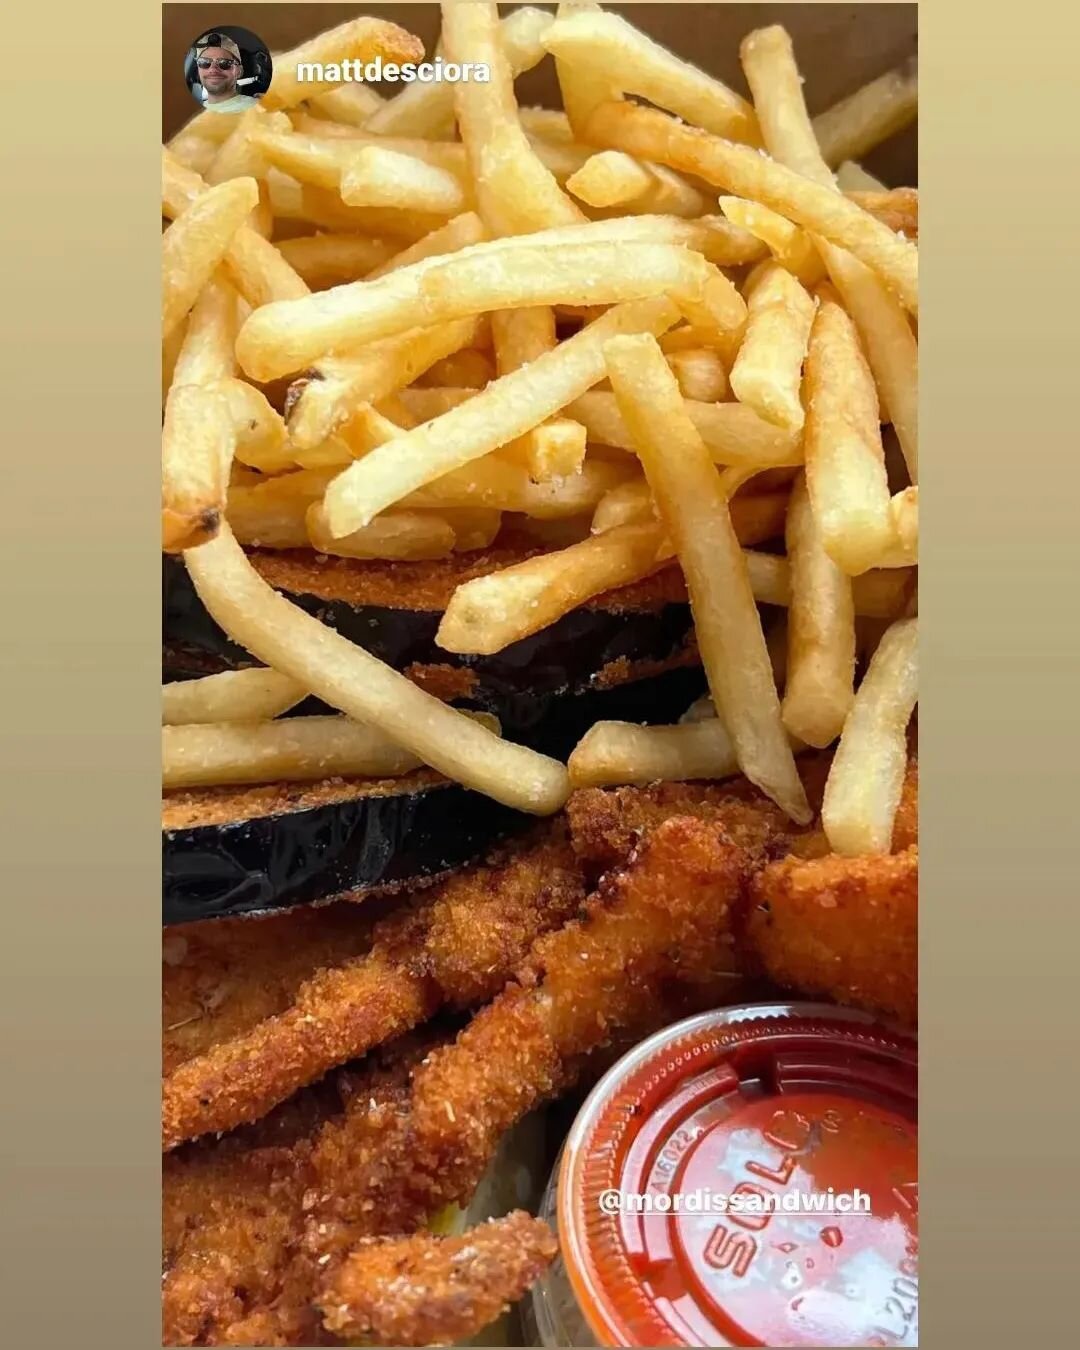 Chicken Schnitzel &amp; Fries! 😋
Thanks @mattdesciora for the great photo! 📸

#MordisSandwichShop #jerseycity #schnitzel #fries #lunch #dinner #delivery #eatlocal